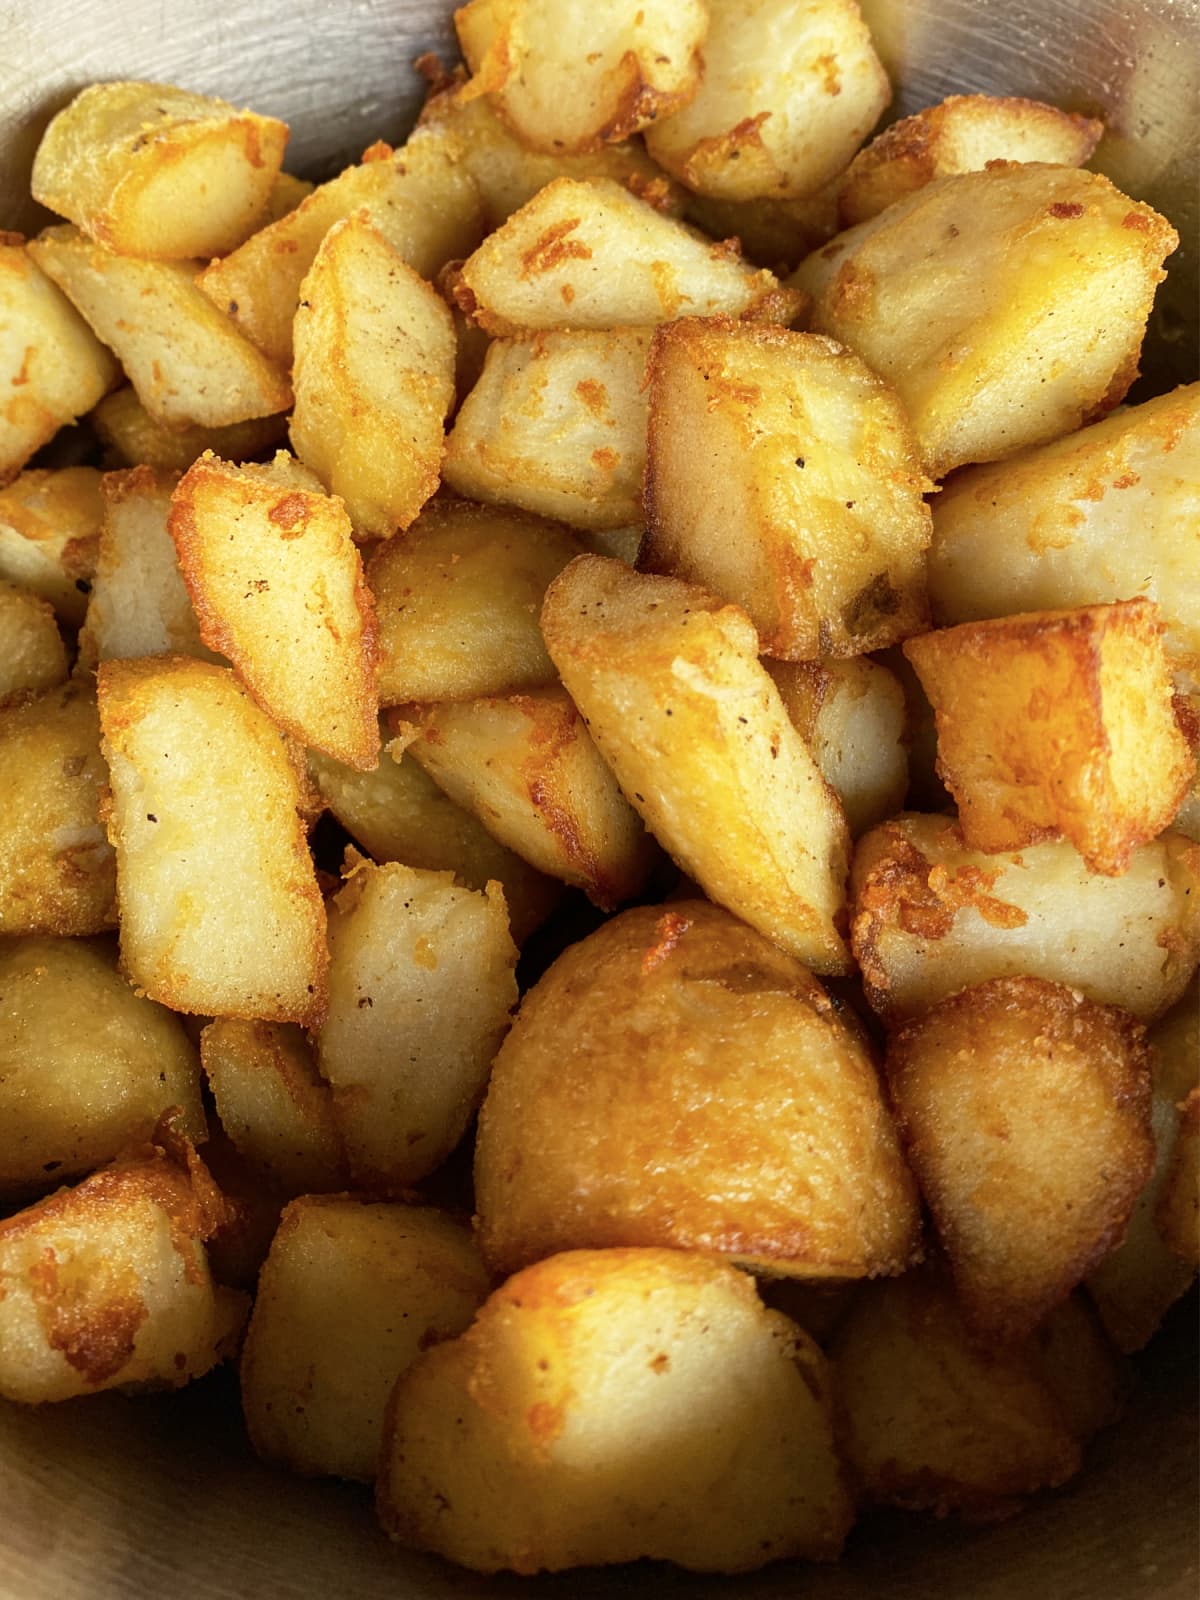 Pile of roast potatoes